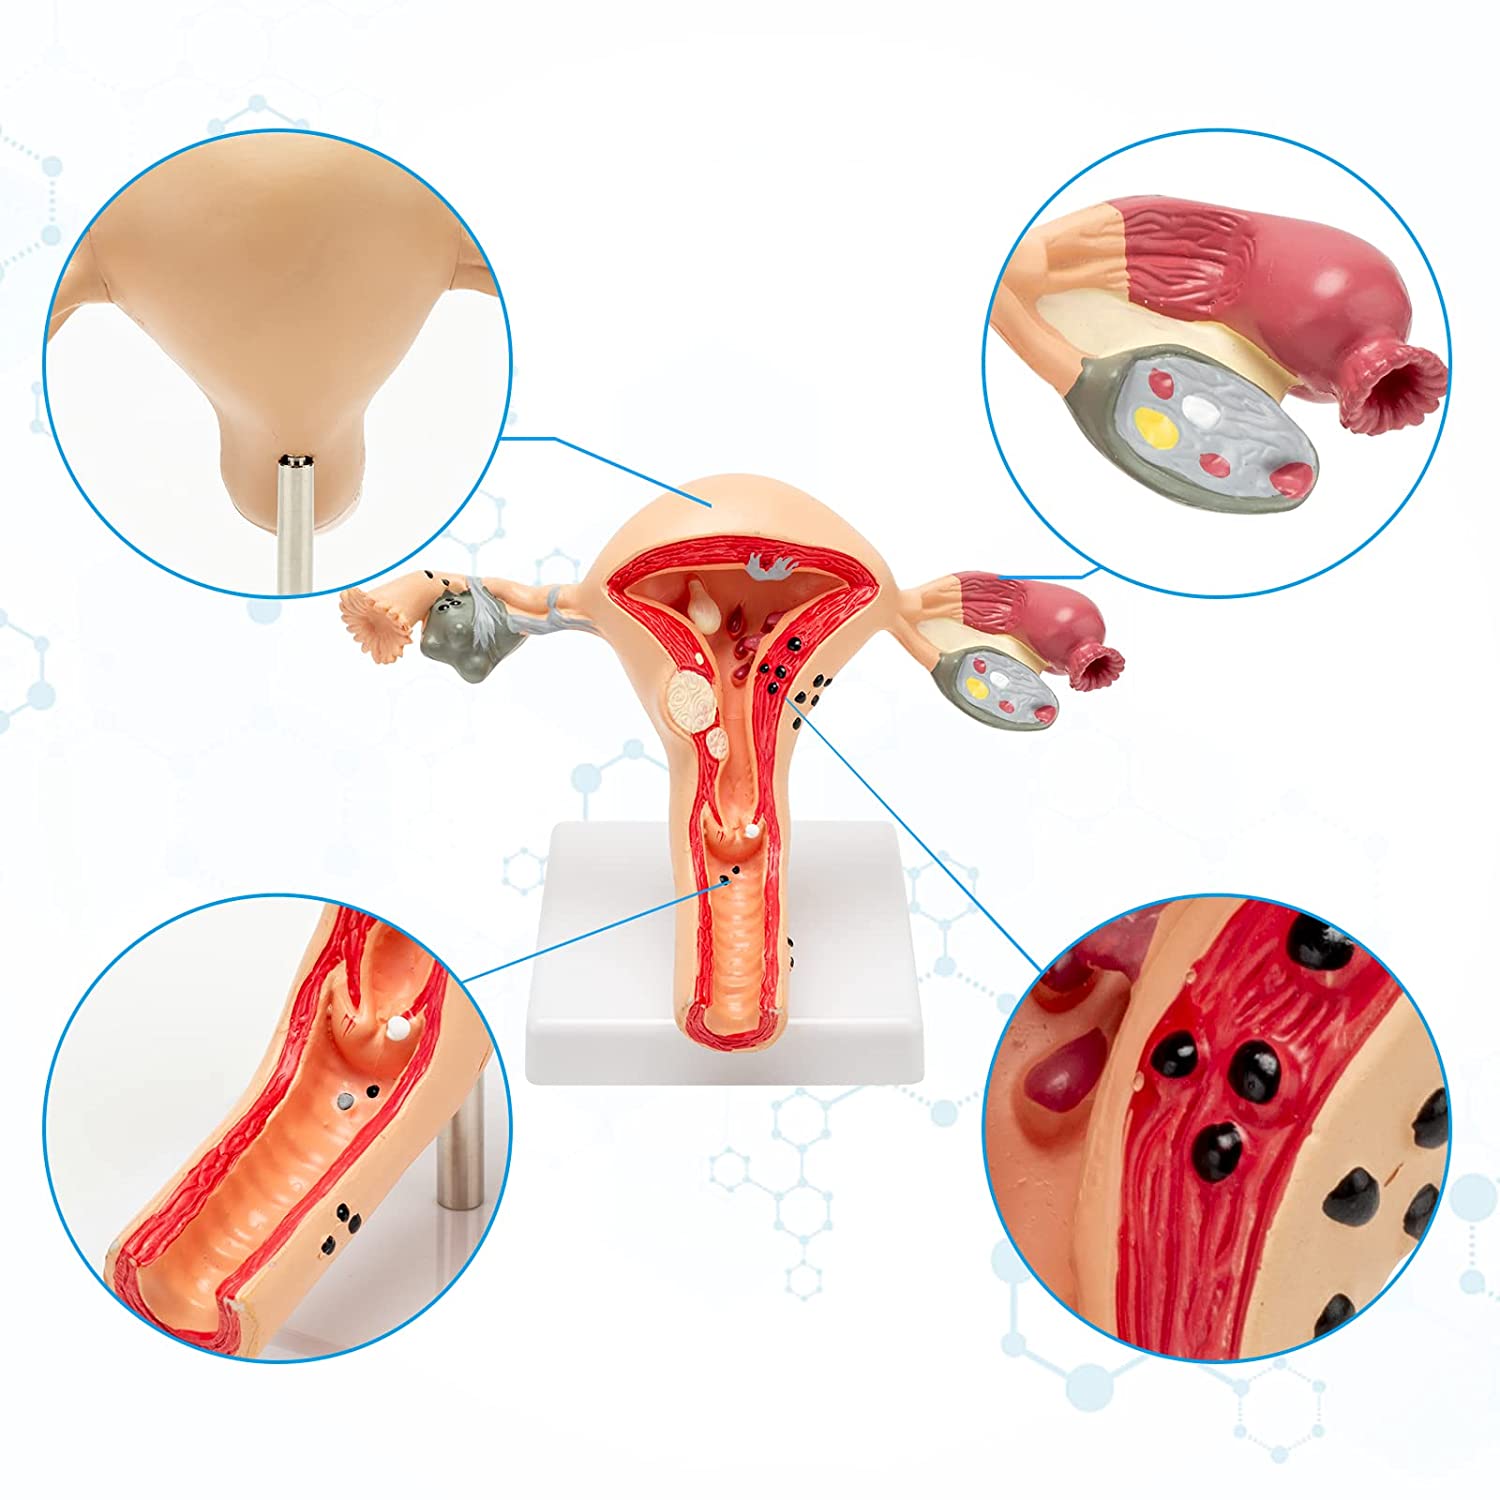 RONTEN Human Uterus and Ovary Model Pathological Uterus Anatomical Model Display